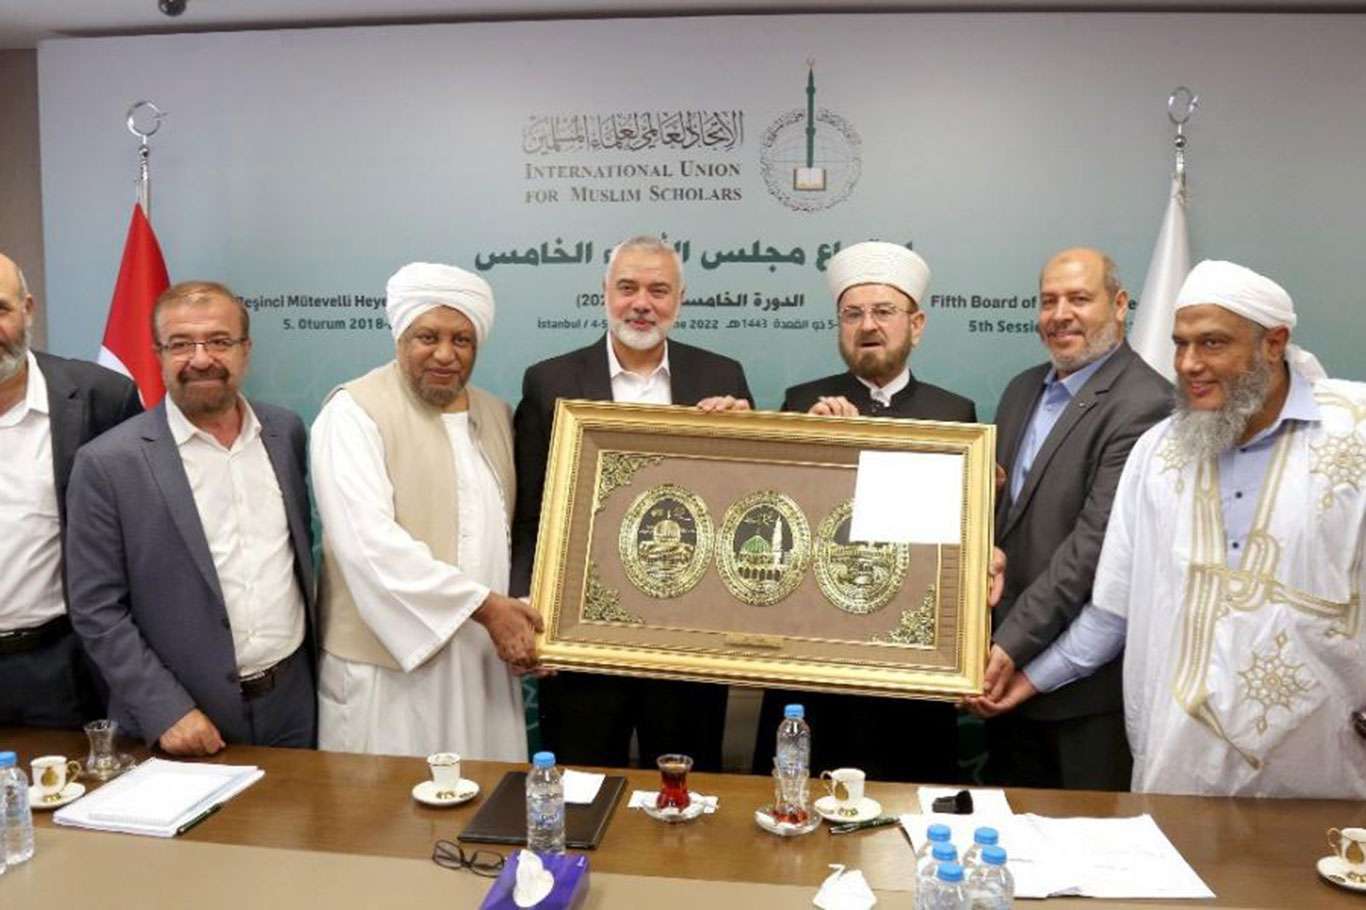 Hamas chief meets International Union of Muslim Scholars in Istanbul